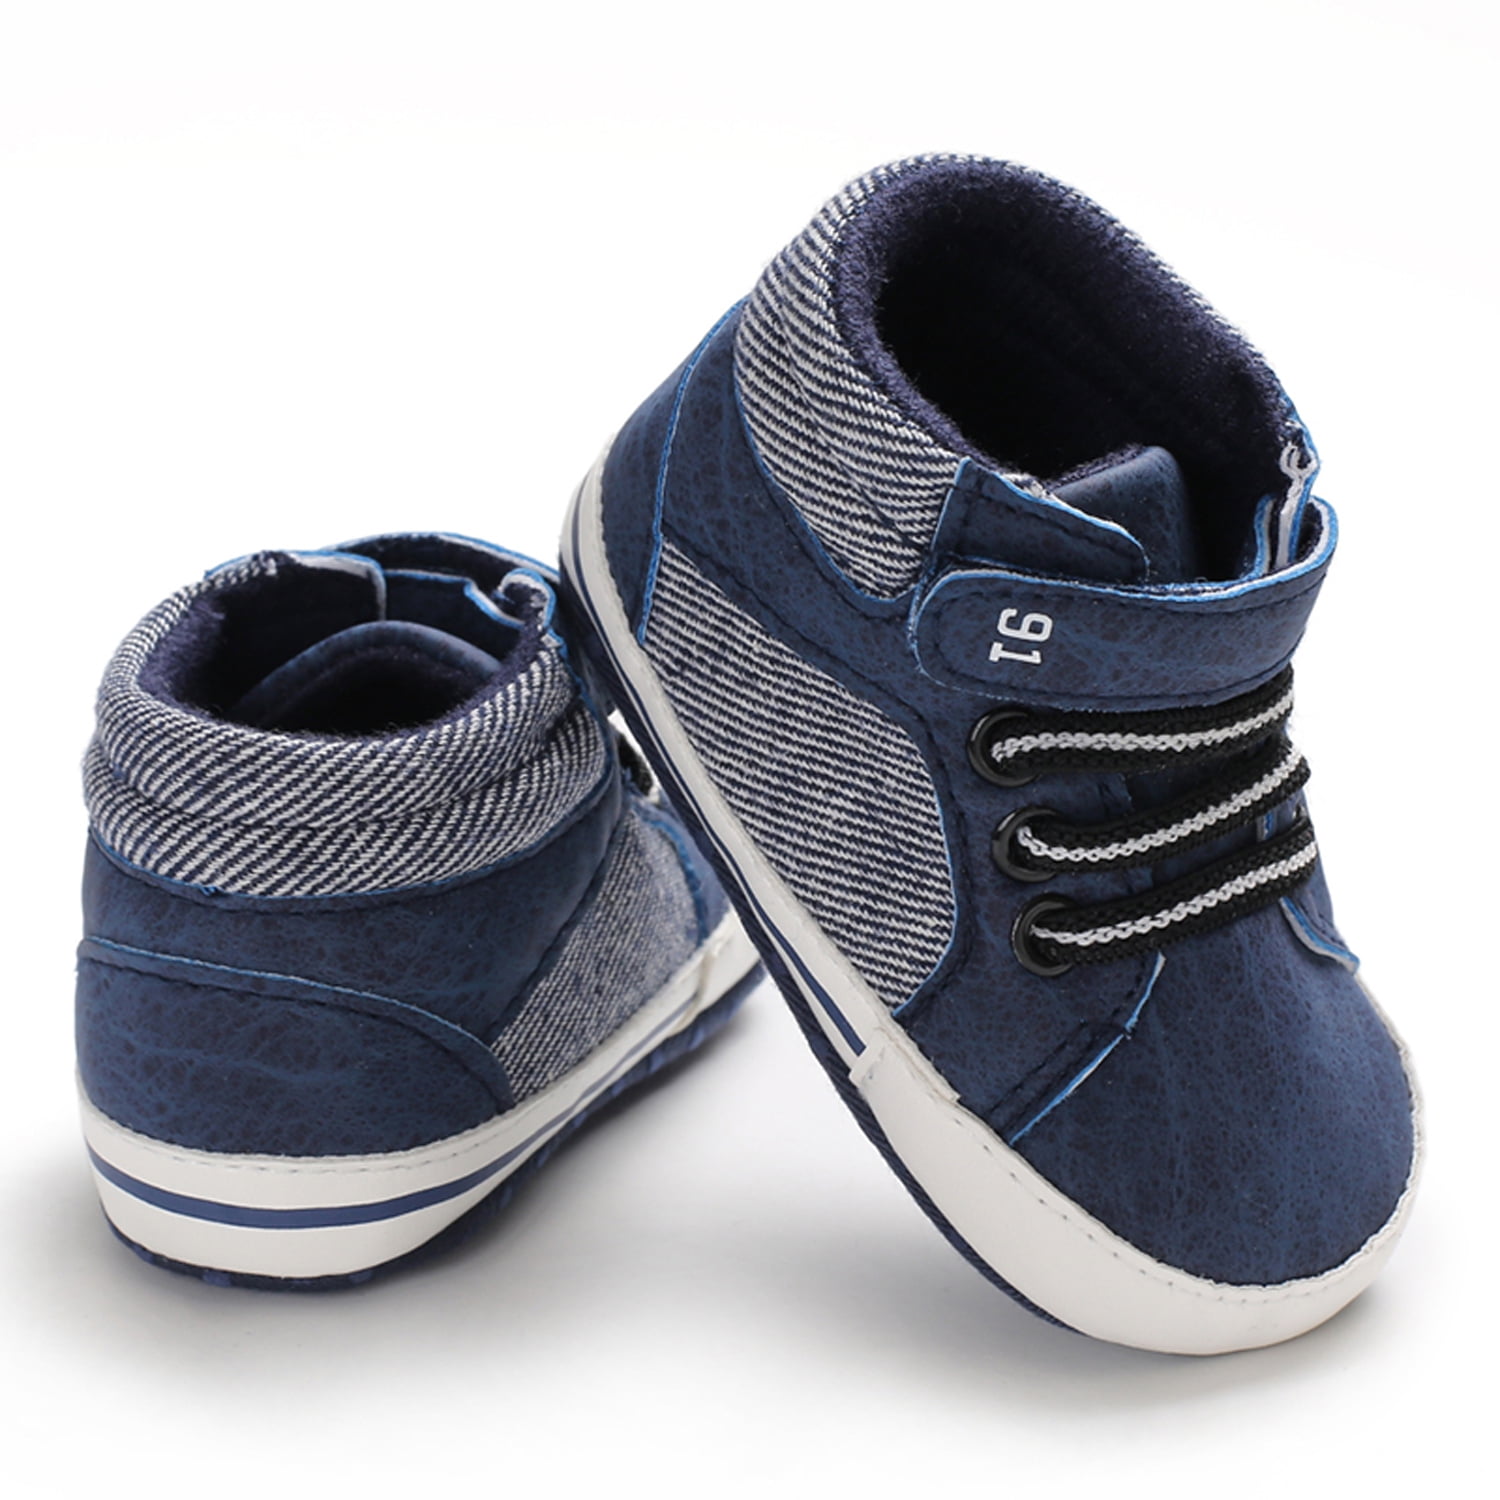 DuAnyozu Baby Boys Girls Soft Walkers Sneakers Trainers Shoes - Walmart.com